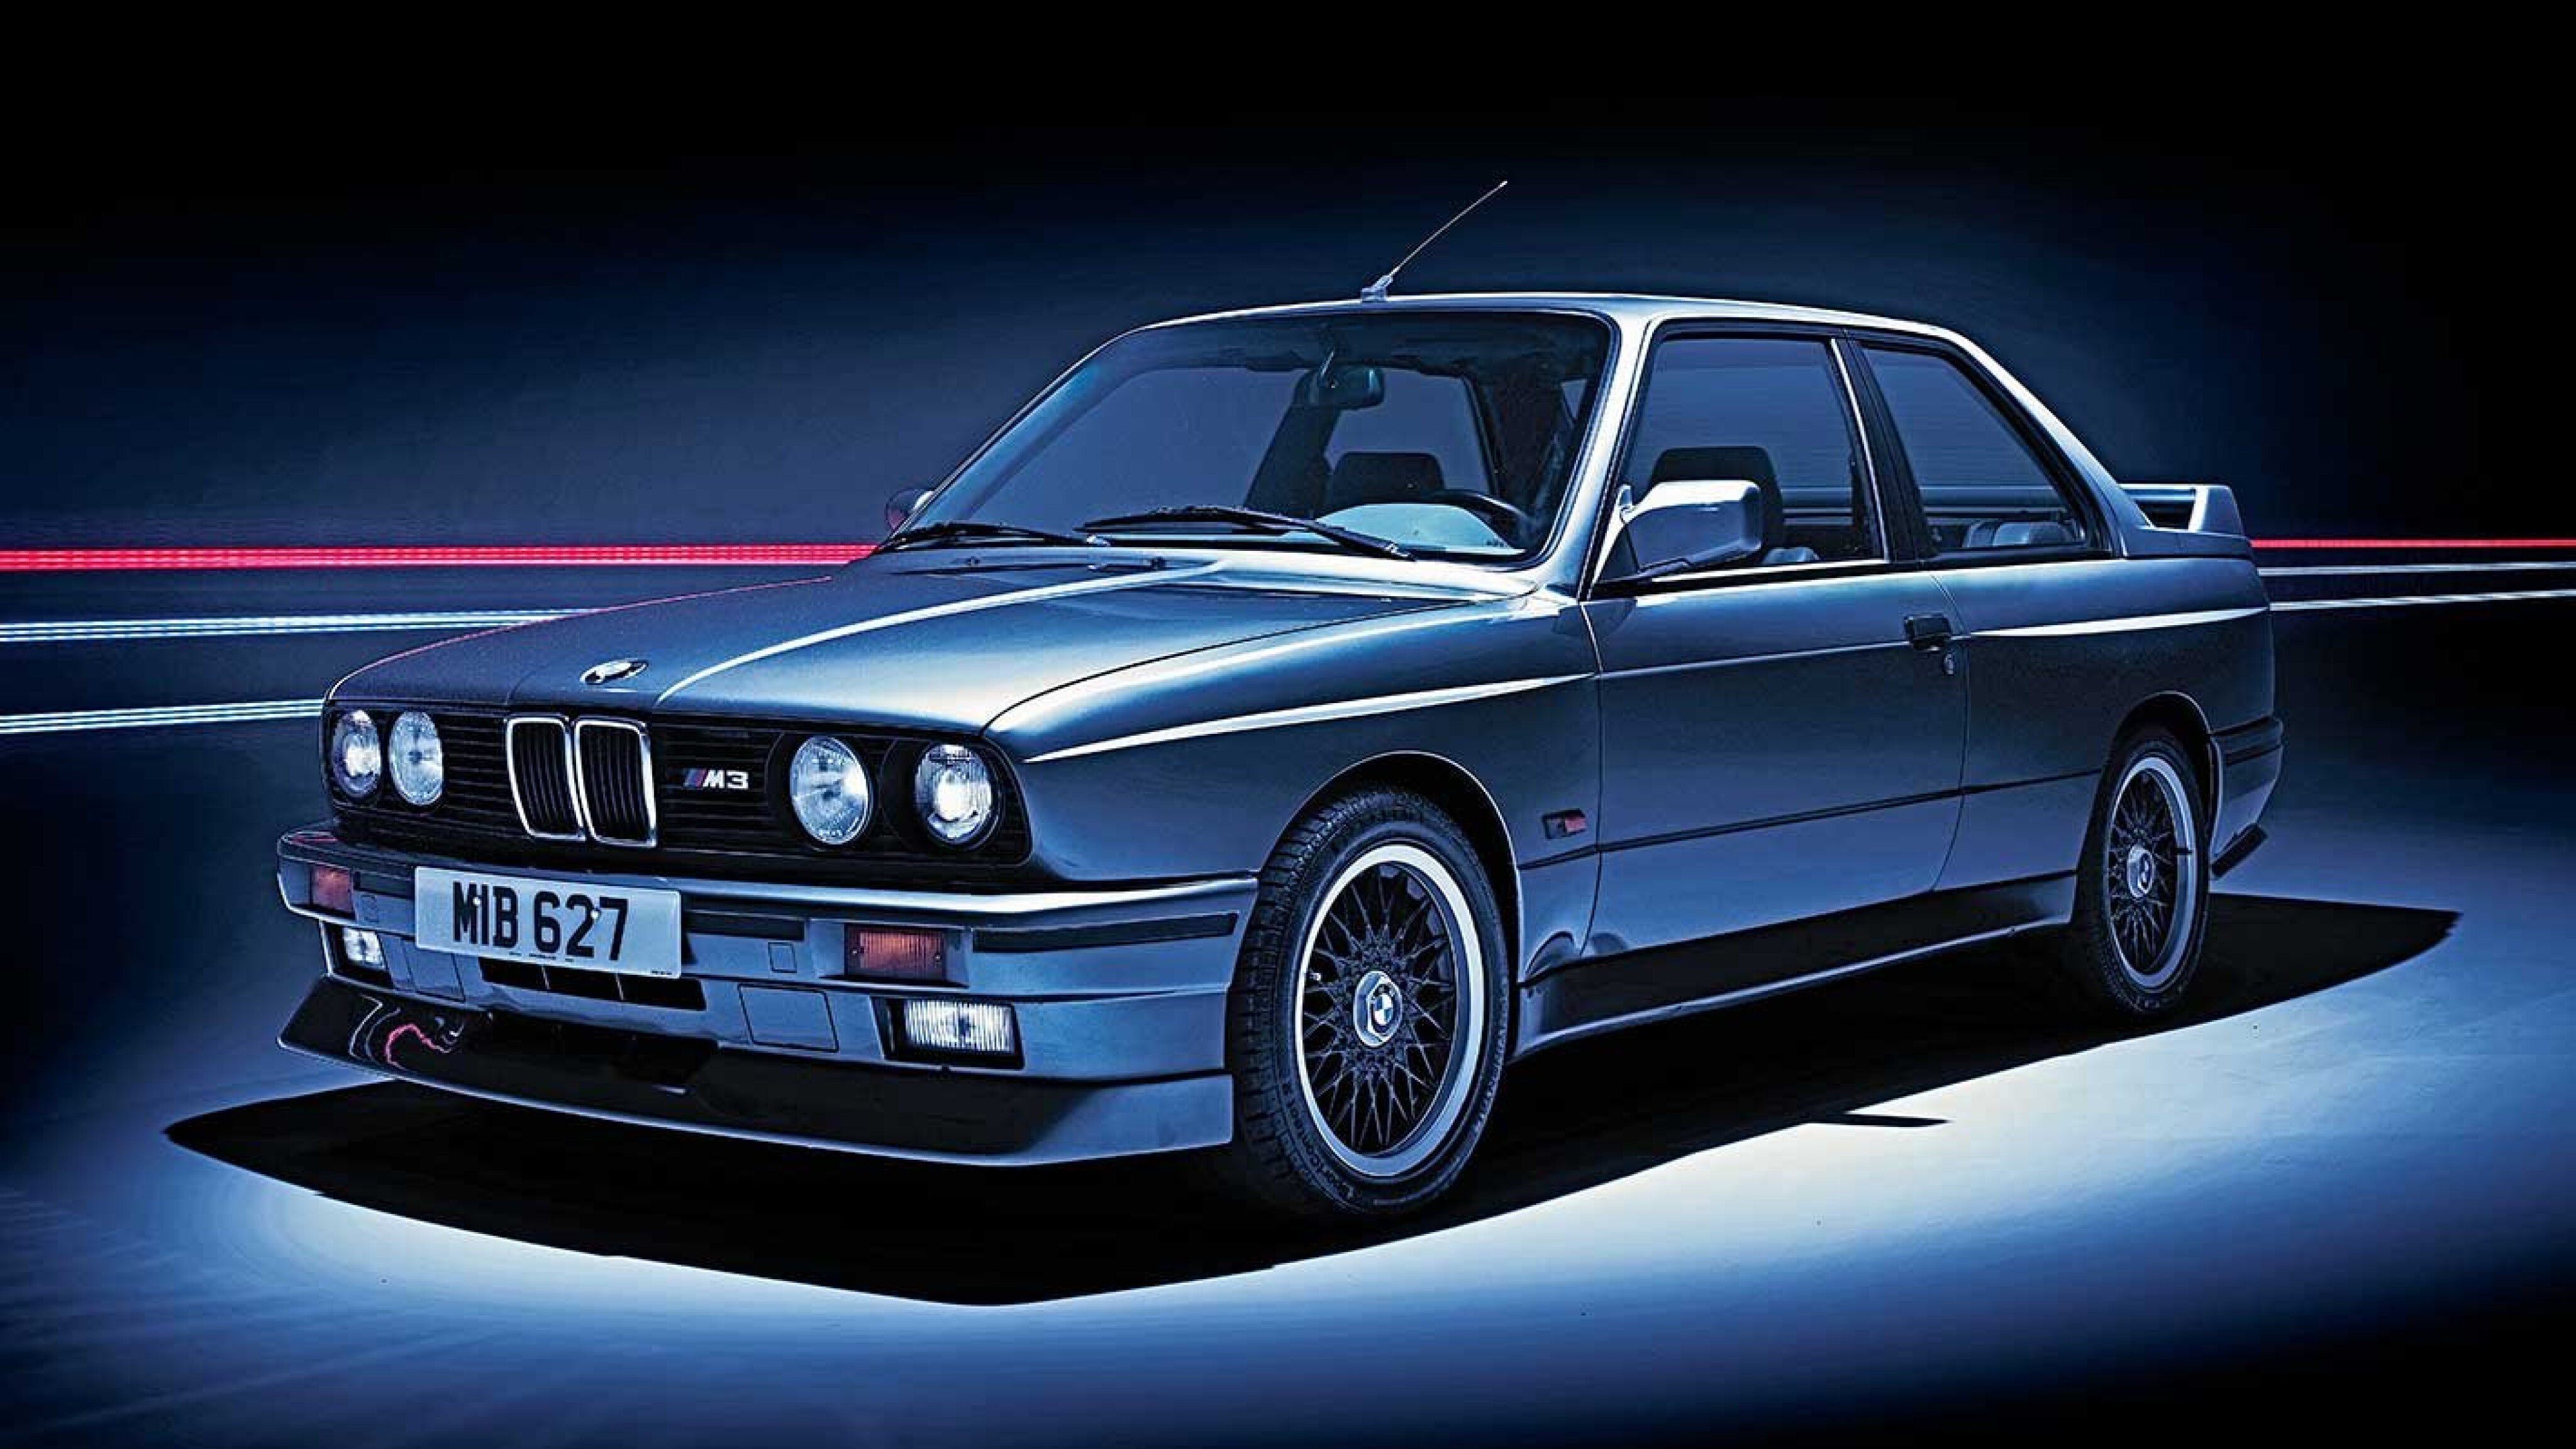 BMW E30 M3 Performance Project Car